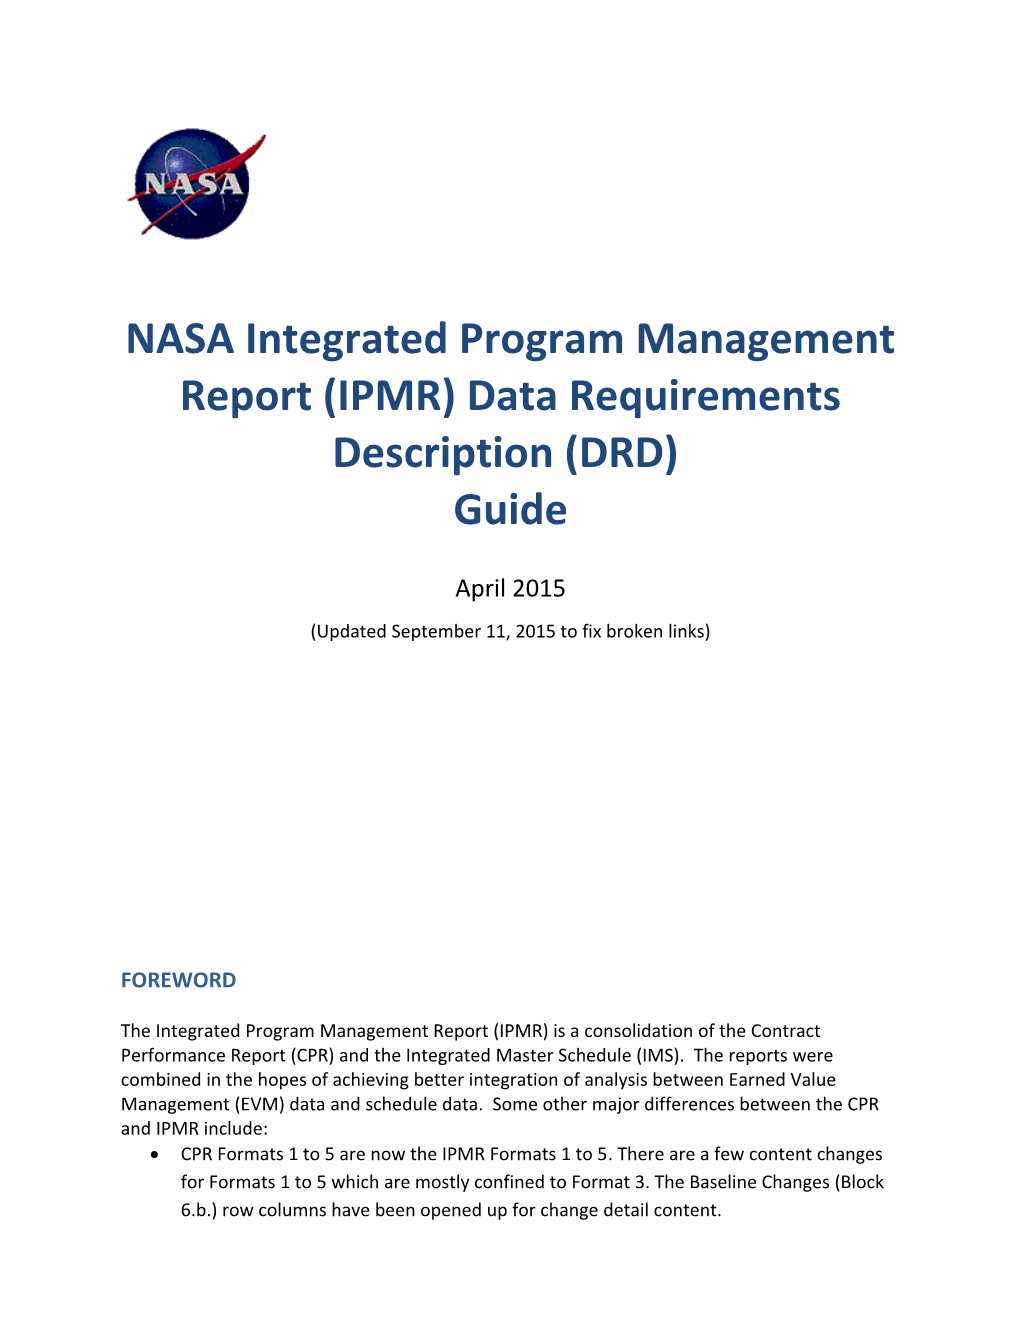 NASA Integrated Program Management Report (IPMR) Data Requirements Description (DRD) Guide